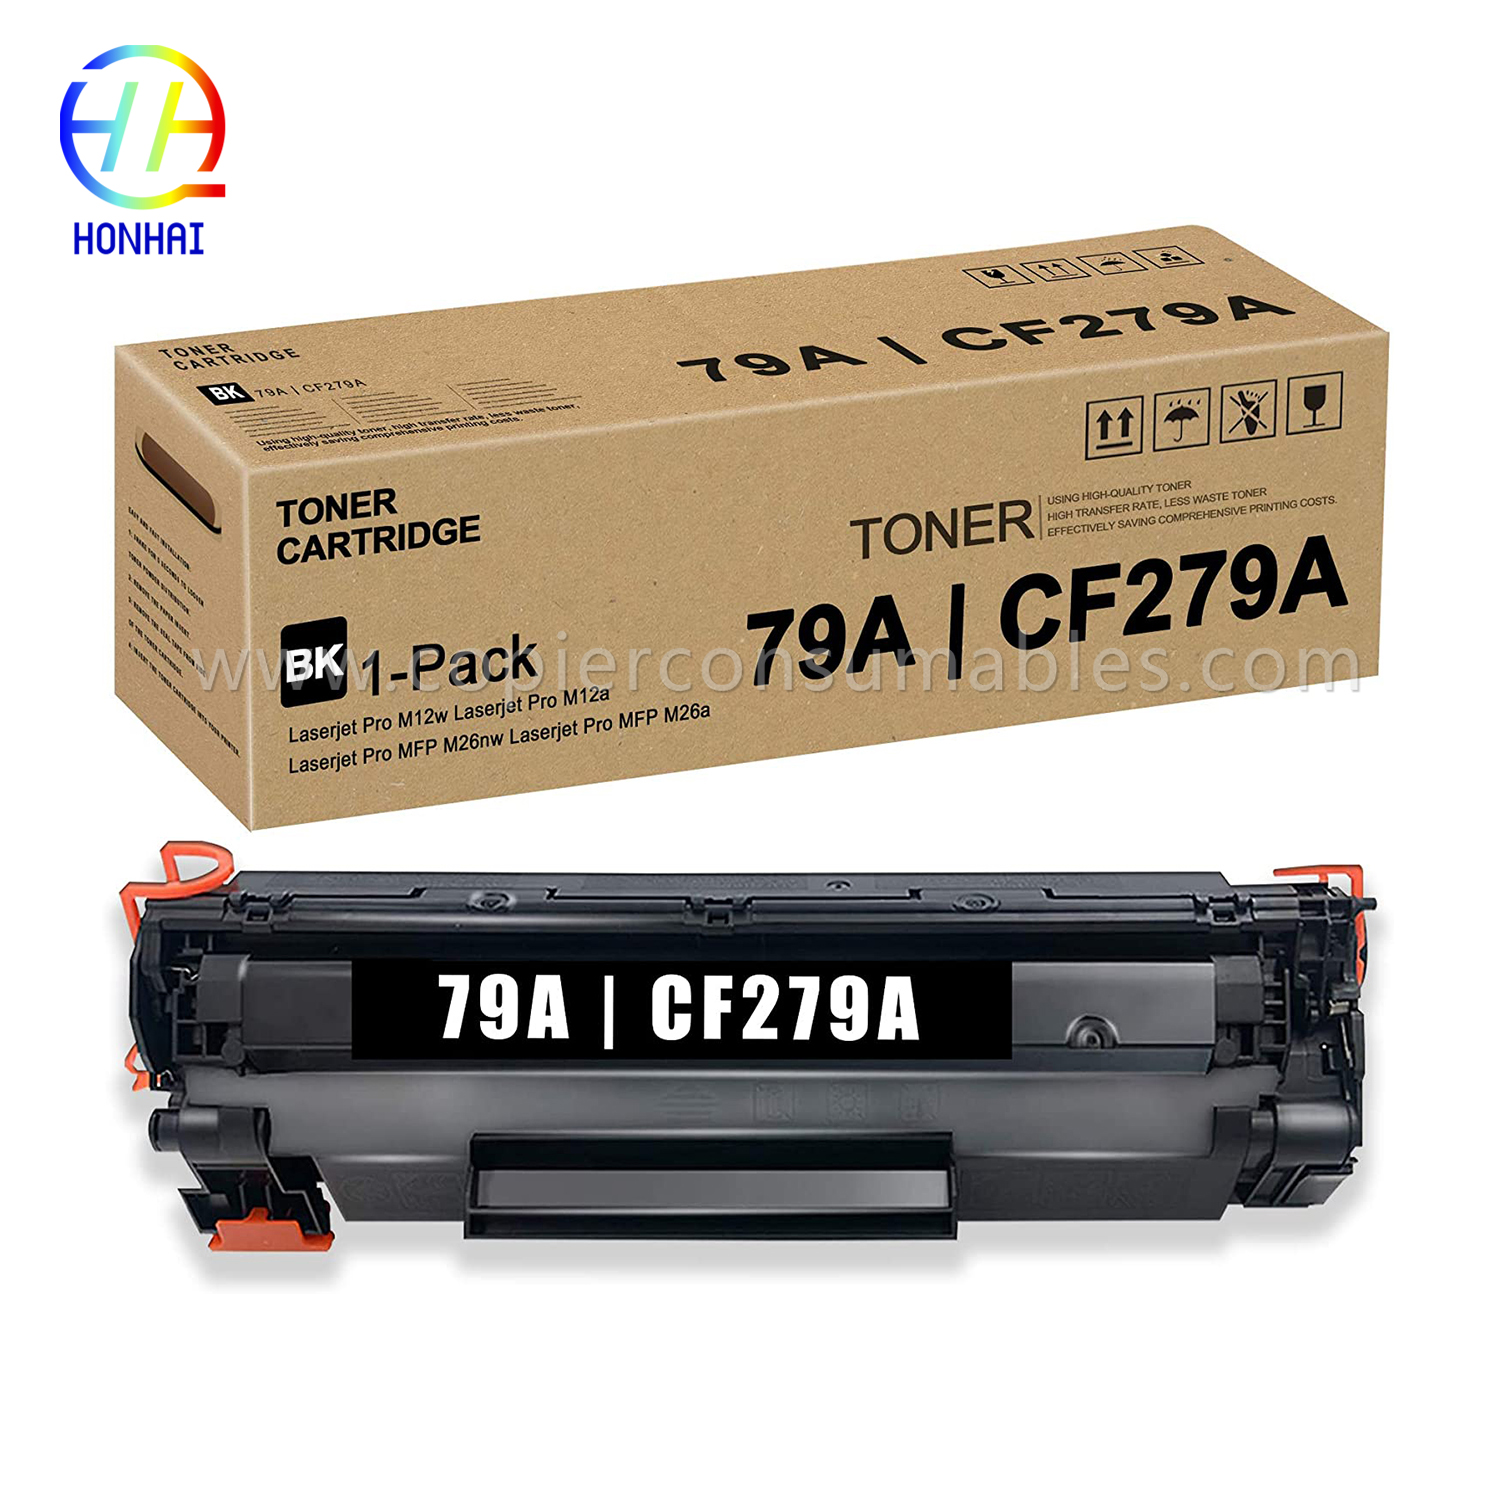 Toner Cartridge for HP Laserjet PRO M12W Mfp M26 M26nw (CF279A)